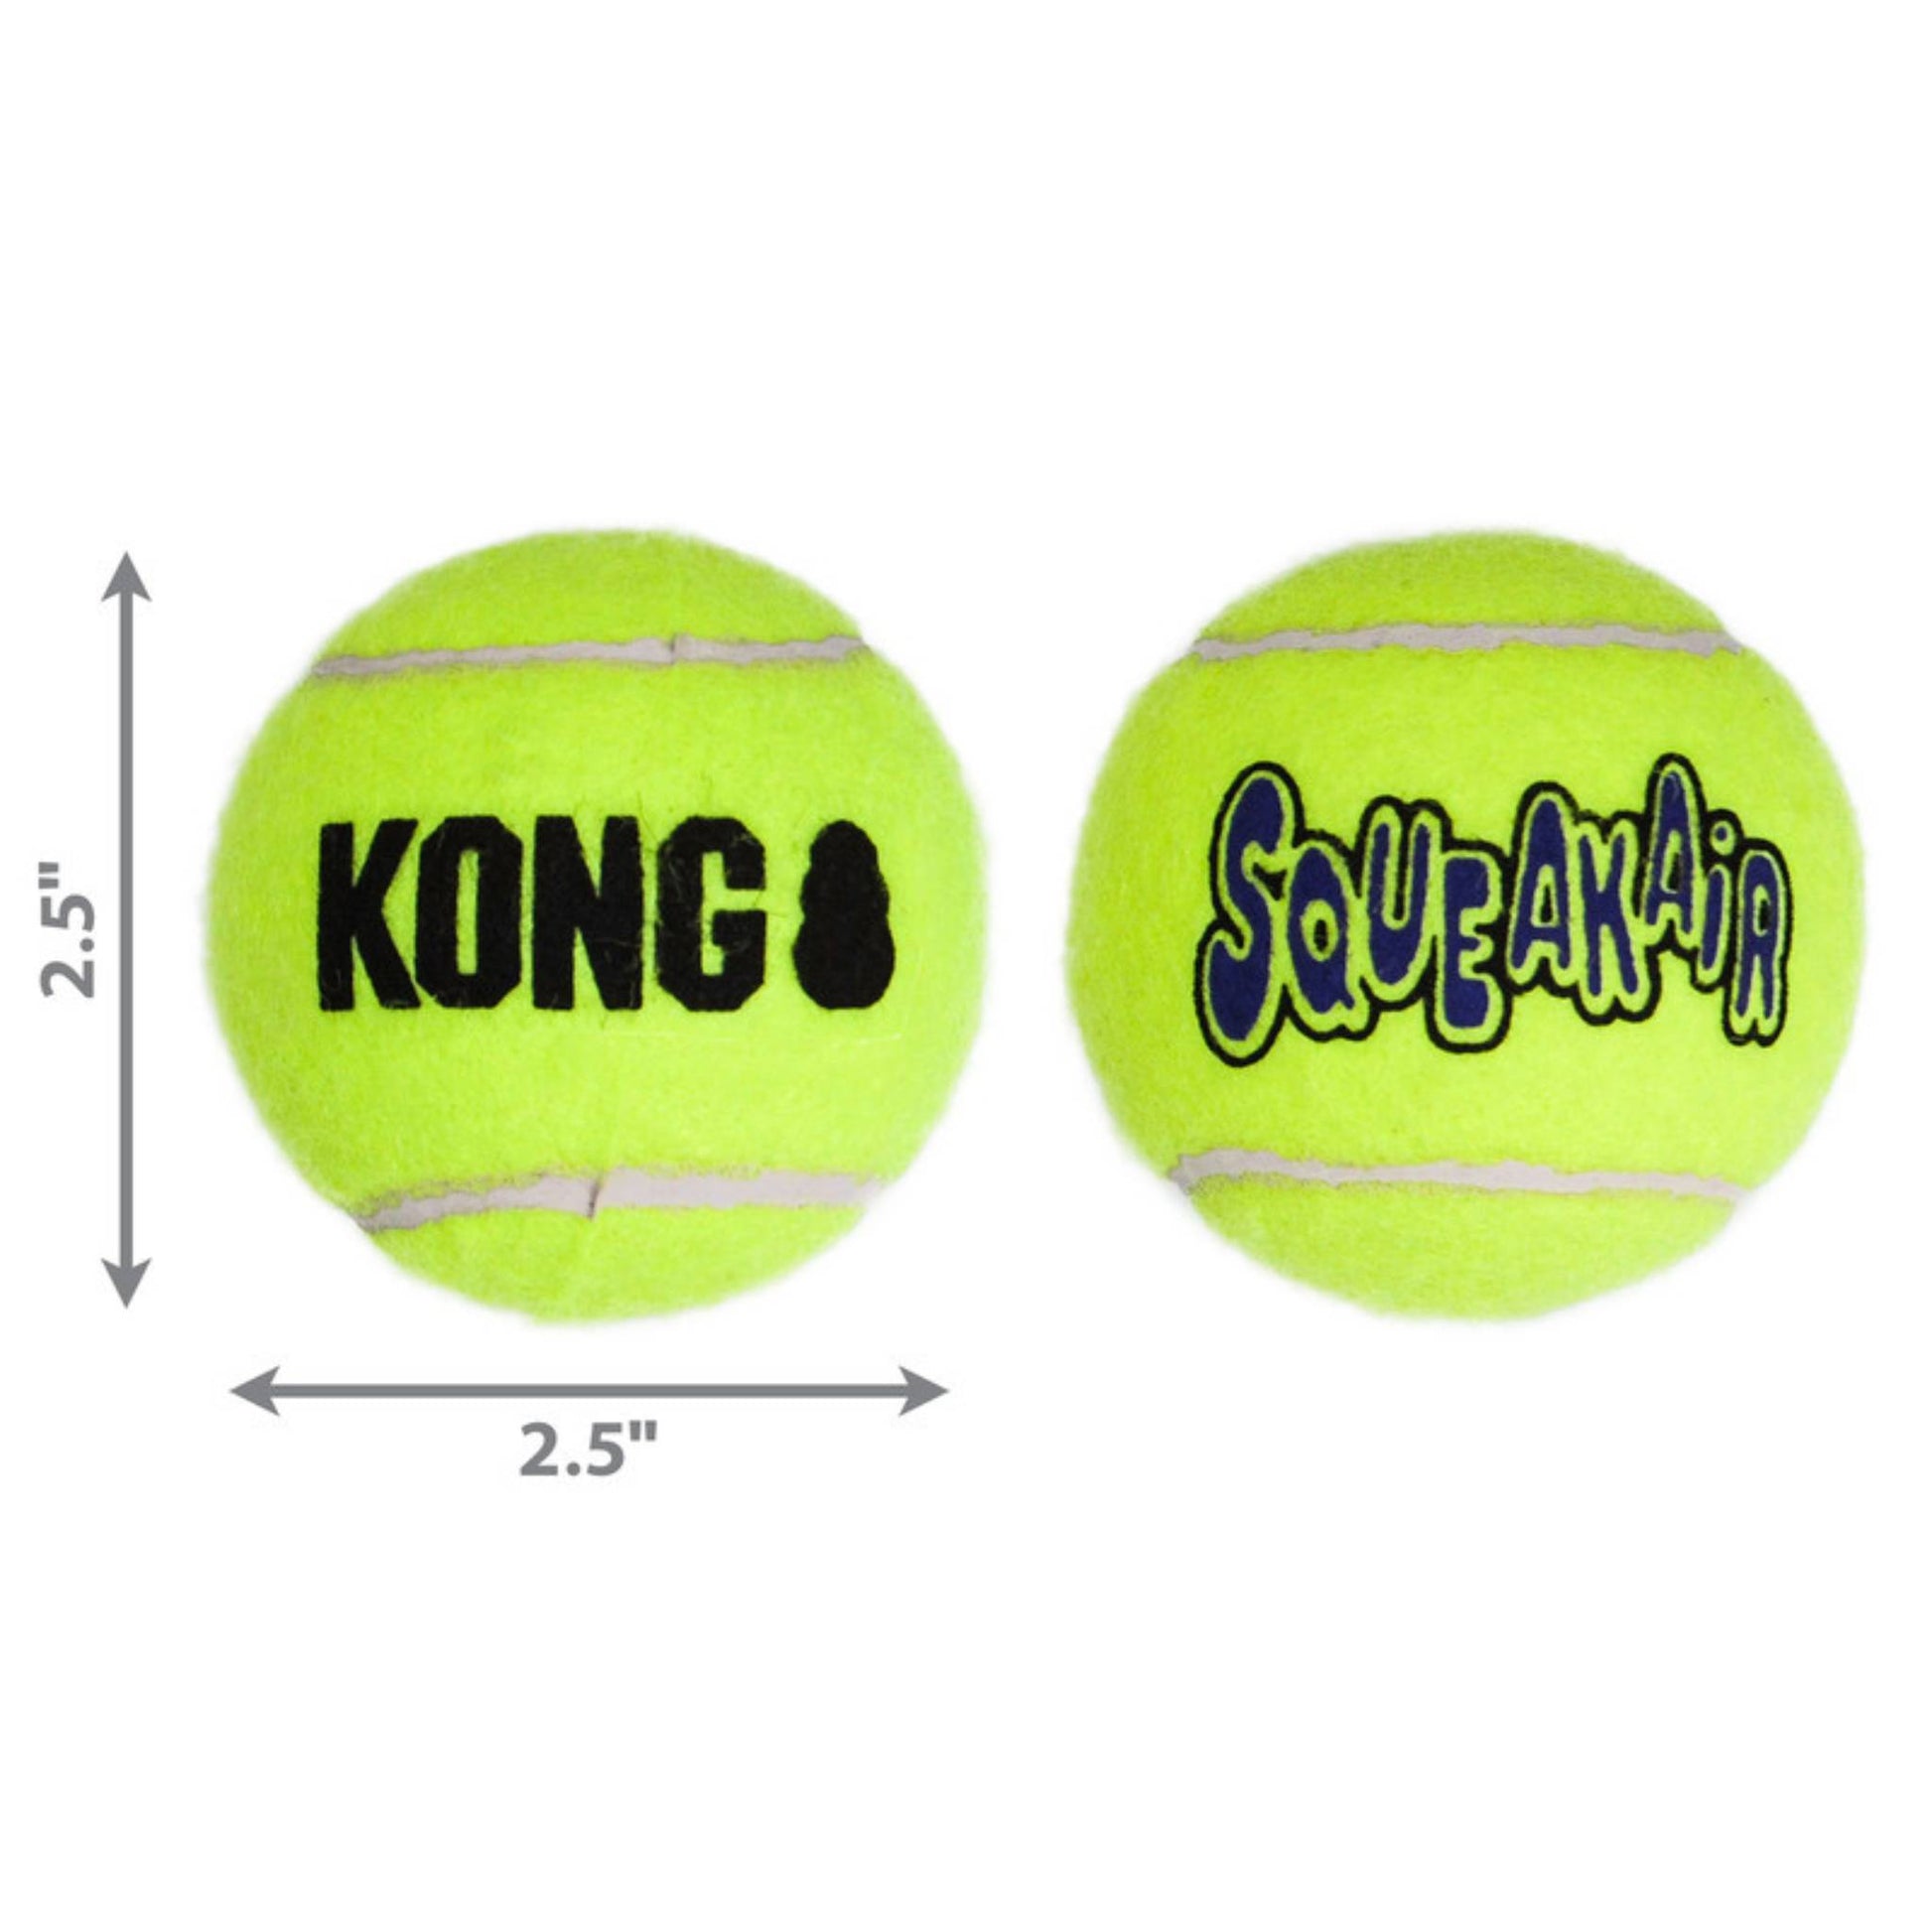 Kong squeakair dog ball medium dimensions